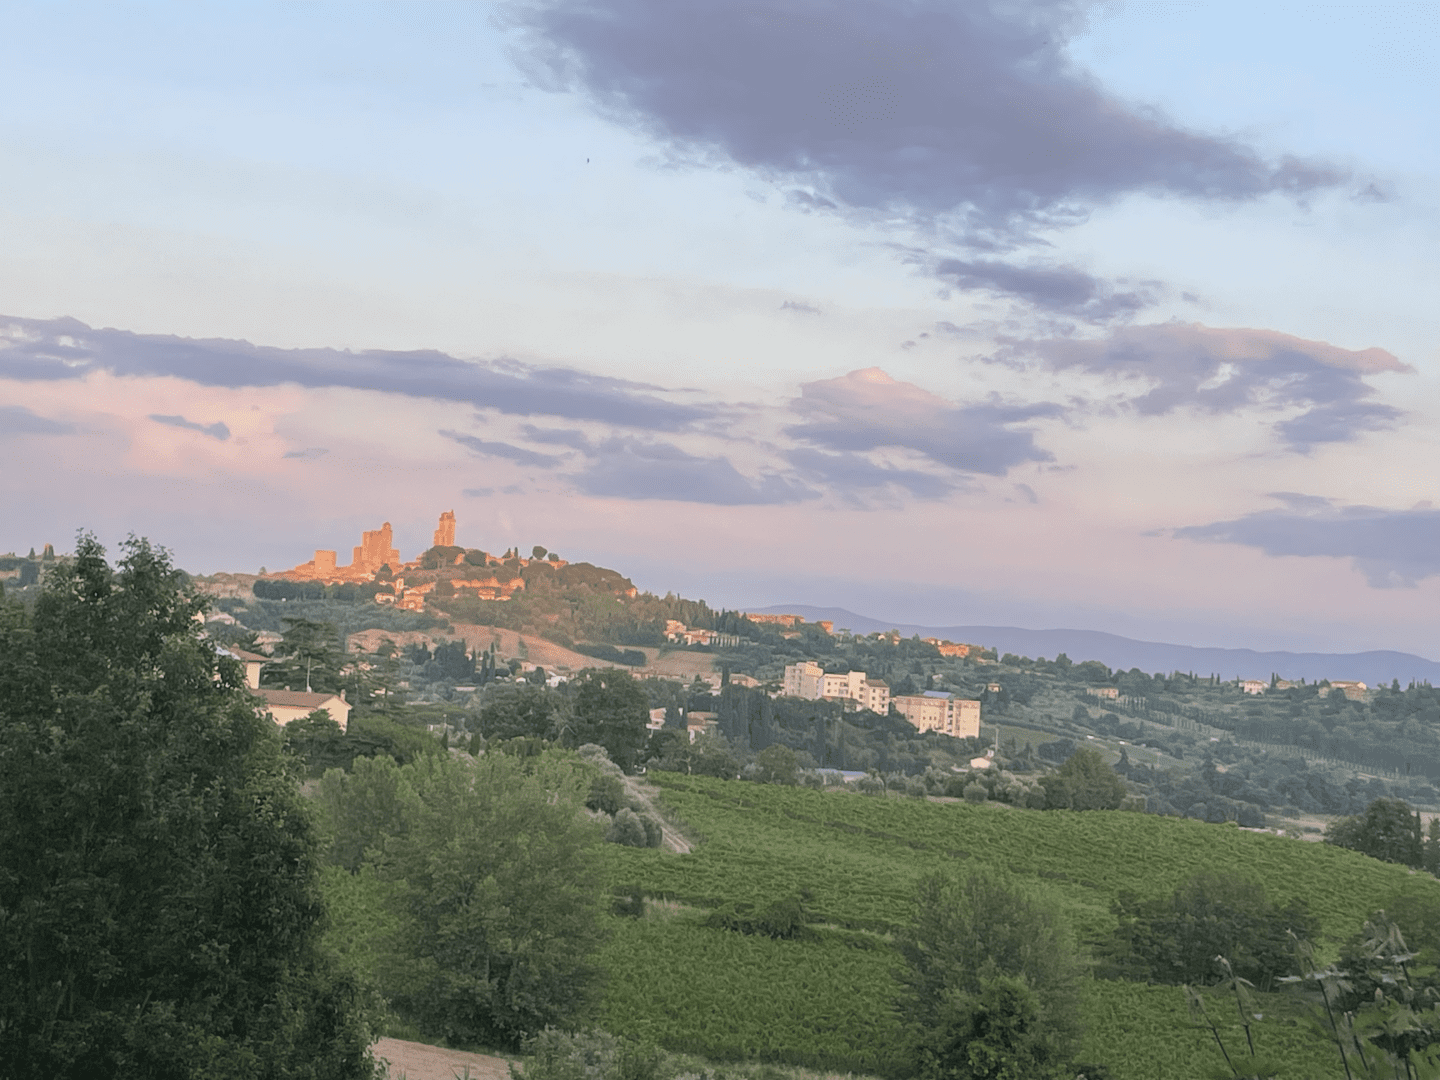 A view of San Gimignano, Italy